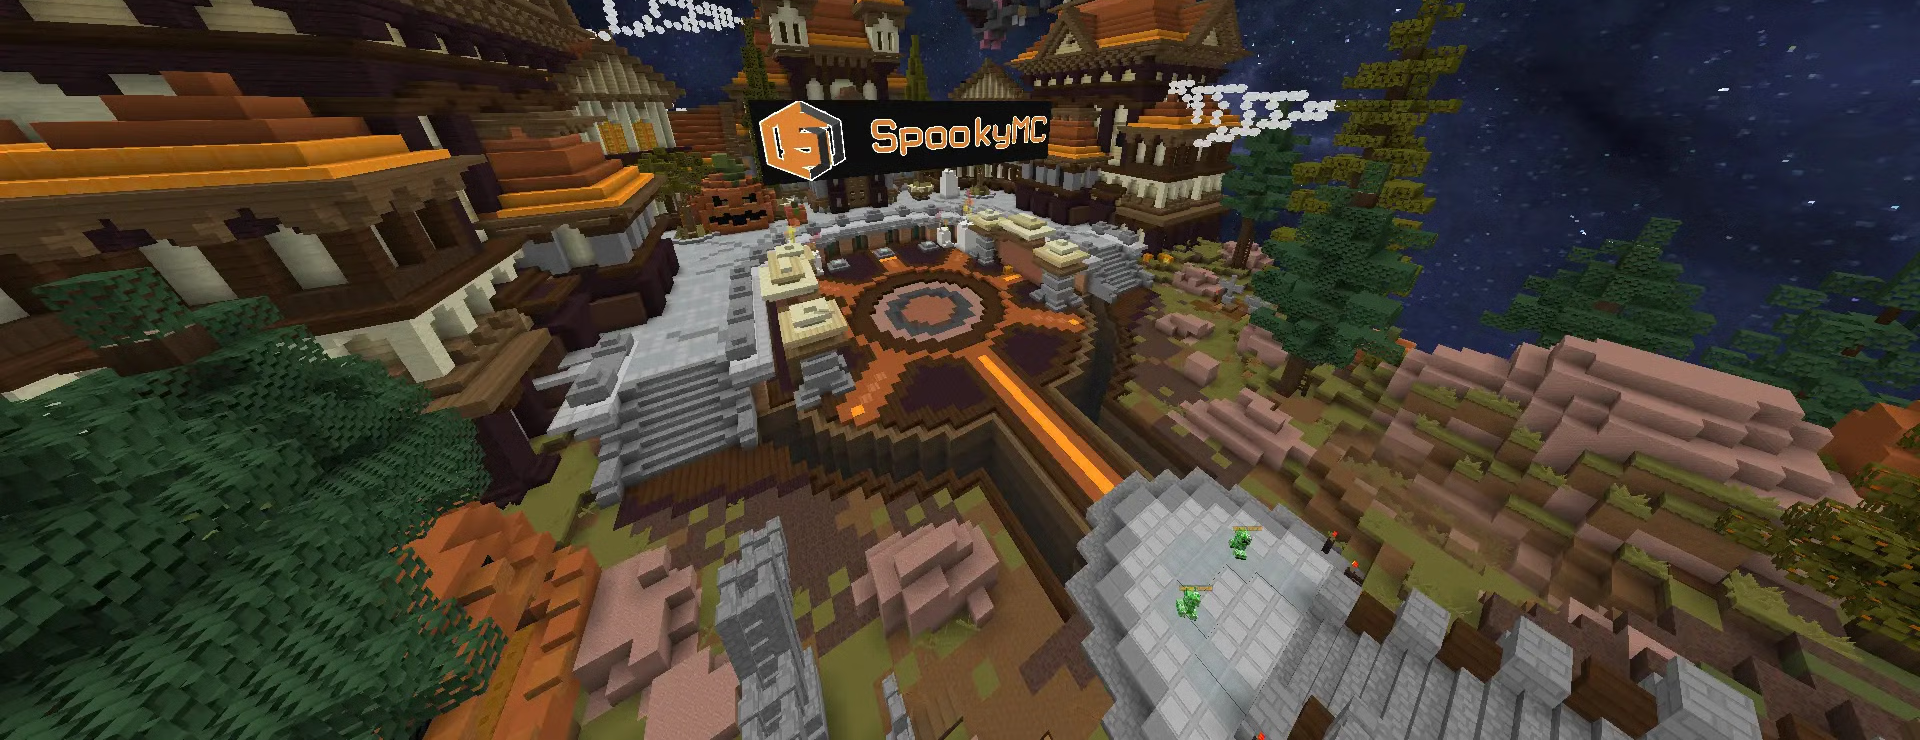 Welcome to SpookyMC